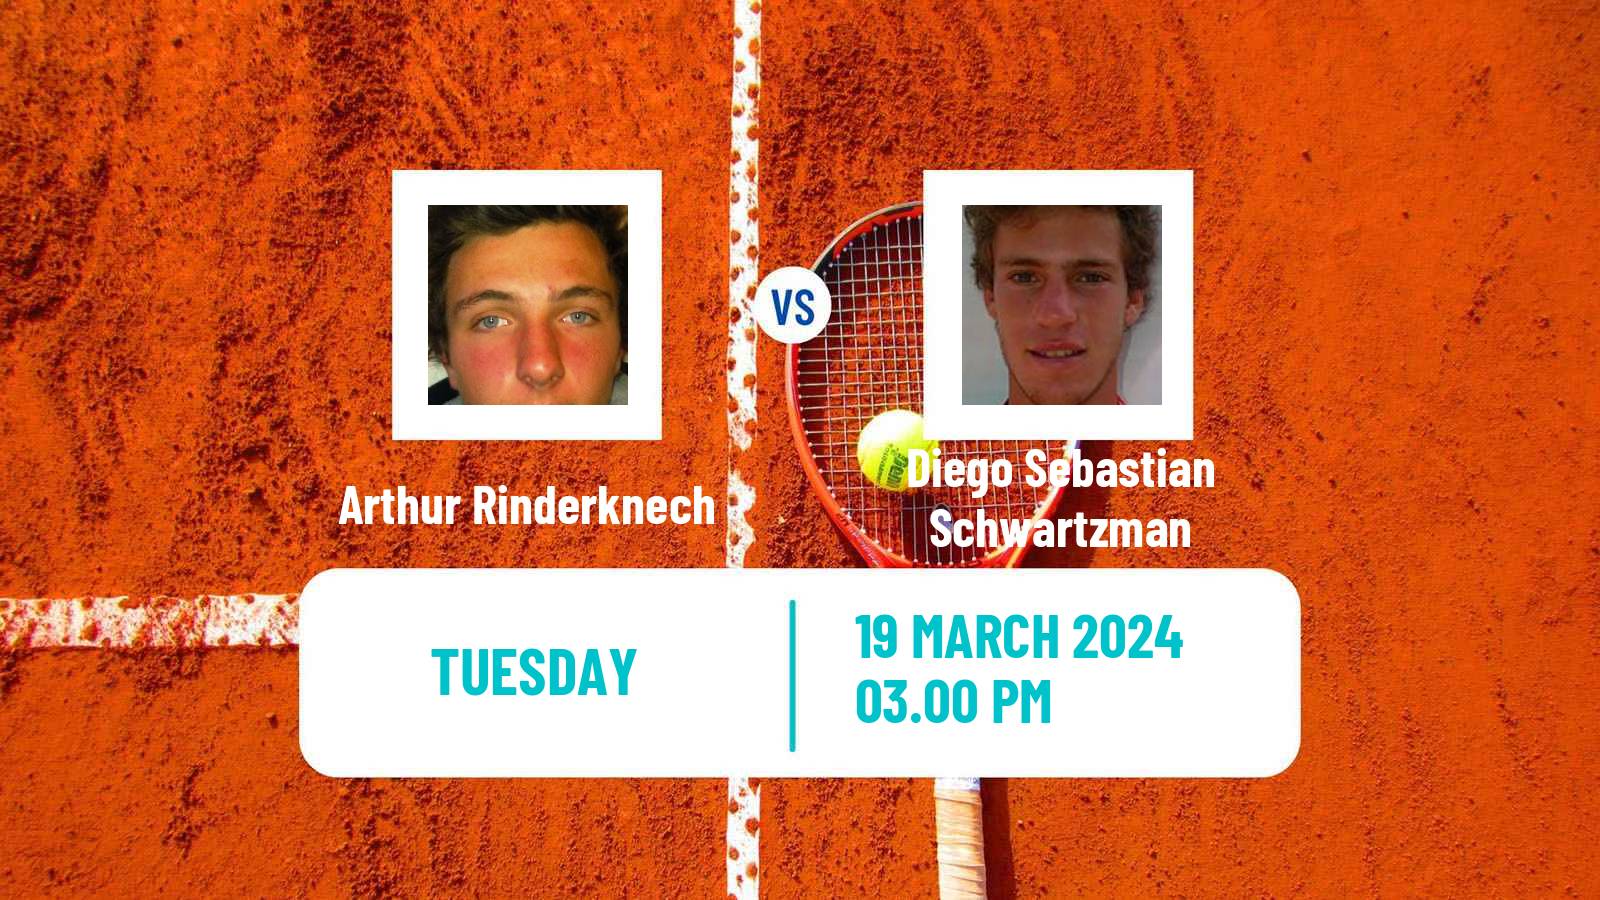 Tennis ATP Miami Arthur Rinderknech - Diego Sebastian Schwartzman